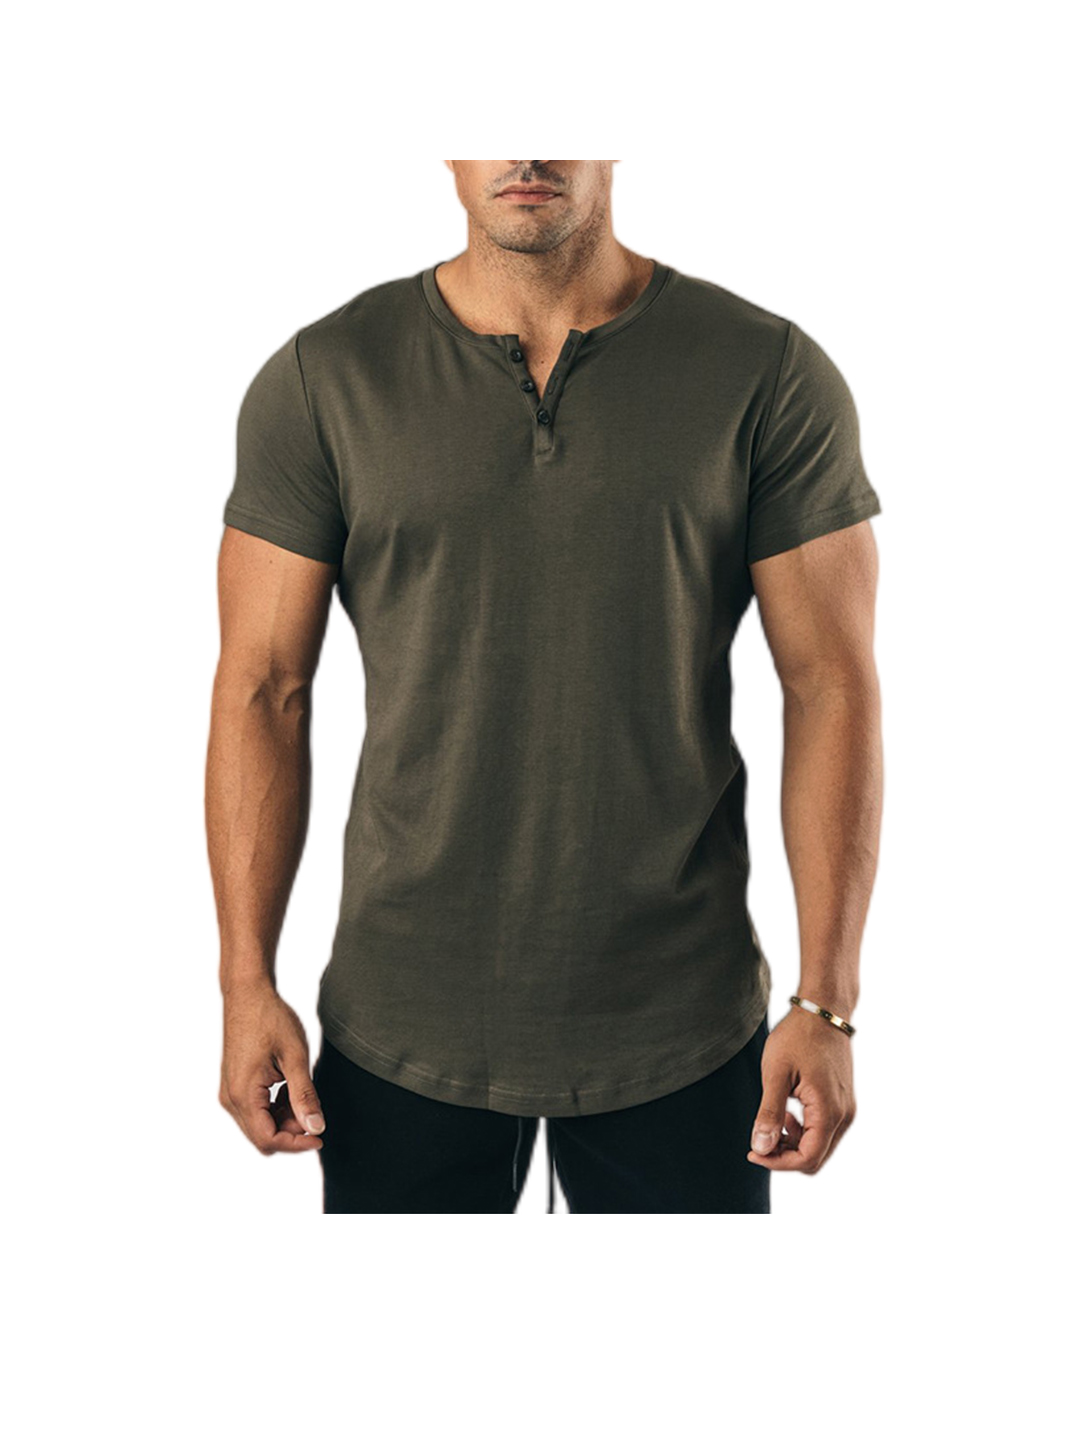 Men's Rolland Solid Color Henley Back Waist Short Sleeve T-shirt-poisonstreetwear.com